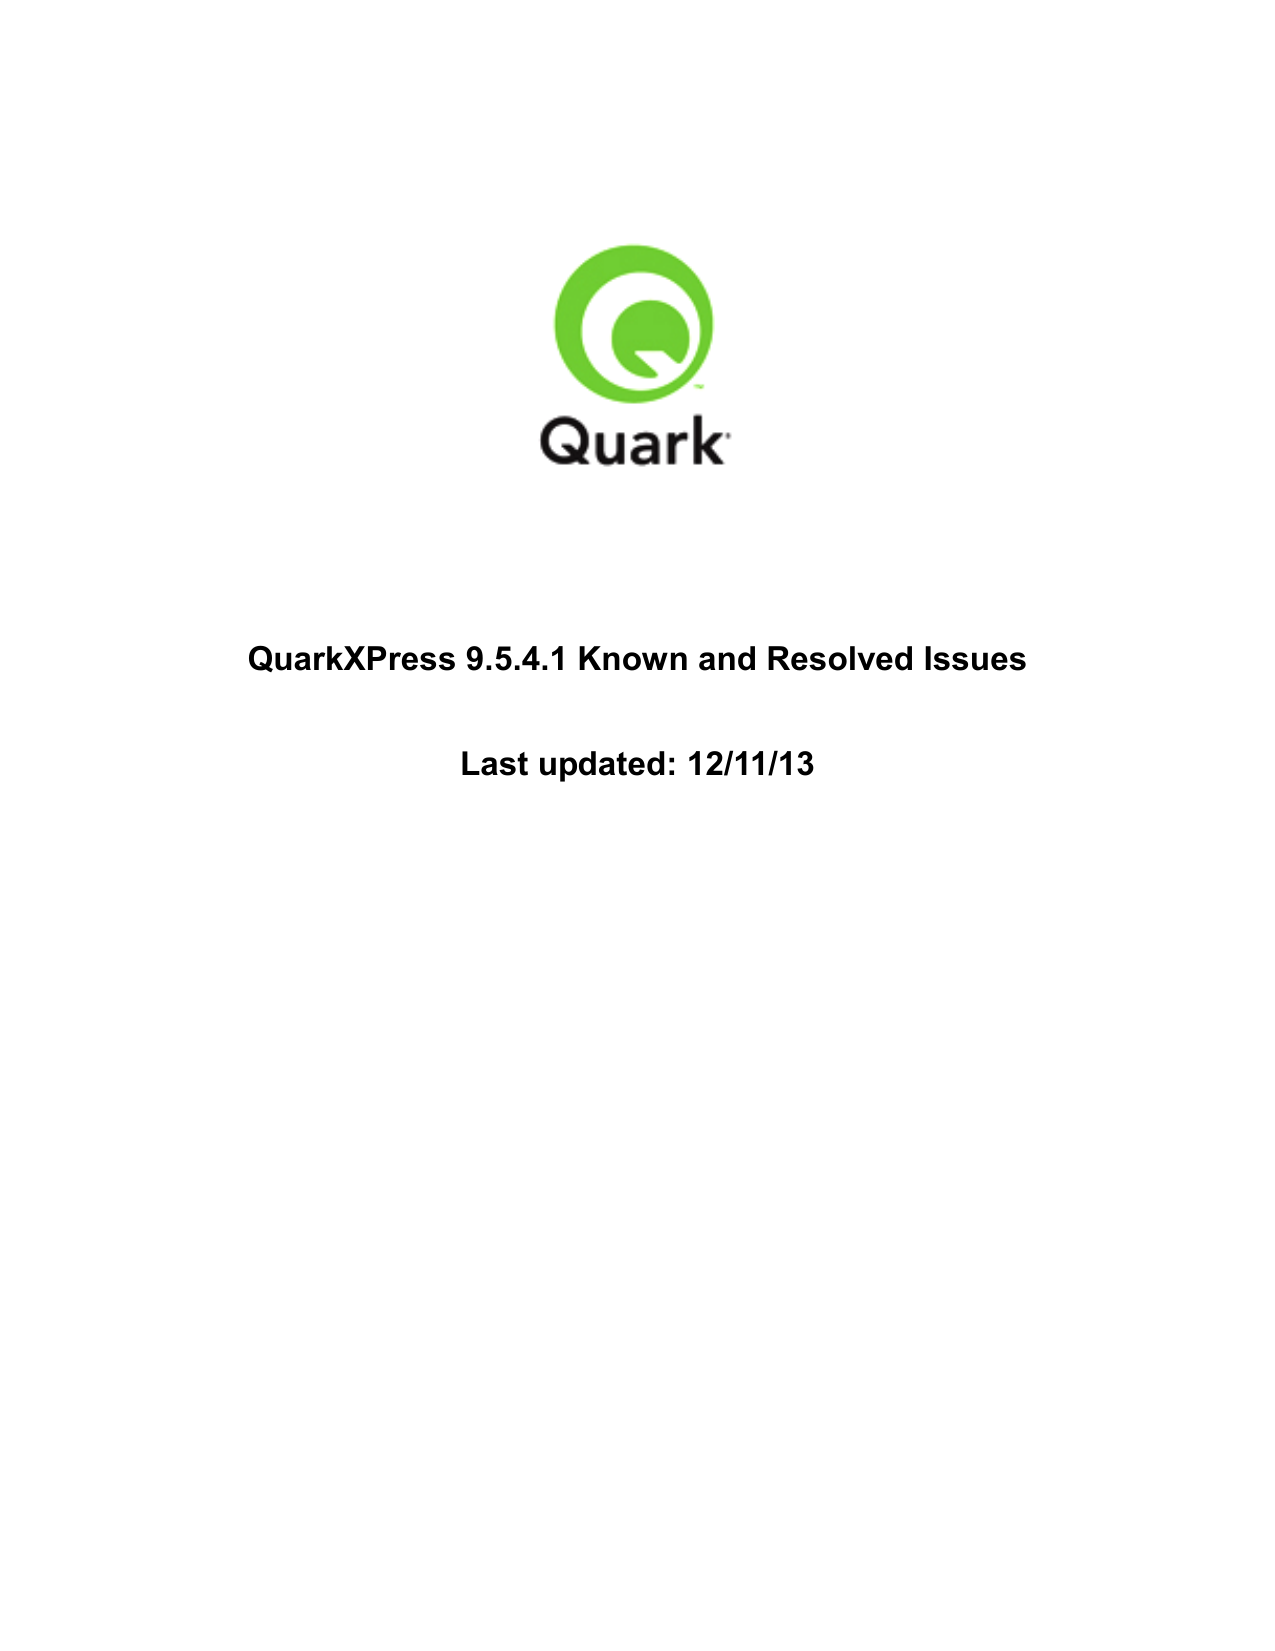 quarkxpress 2015 install error 3 windows